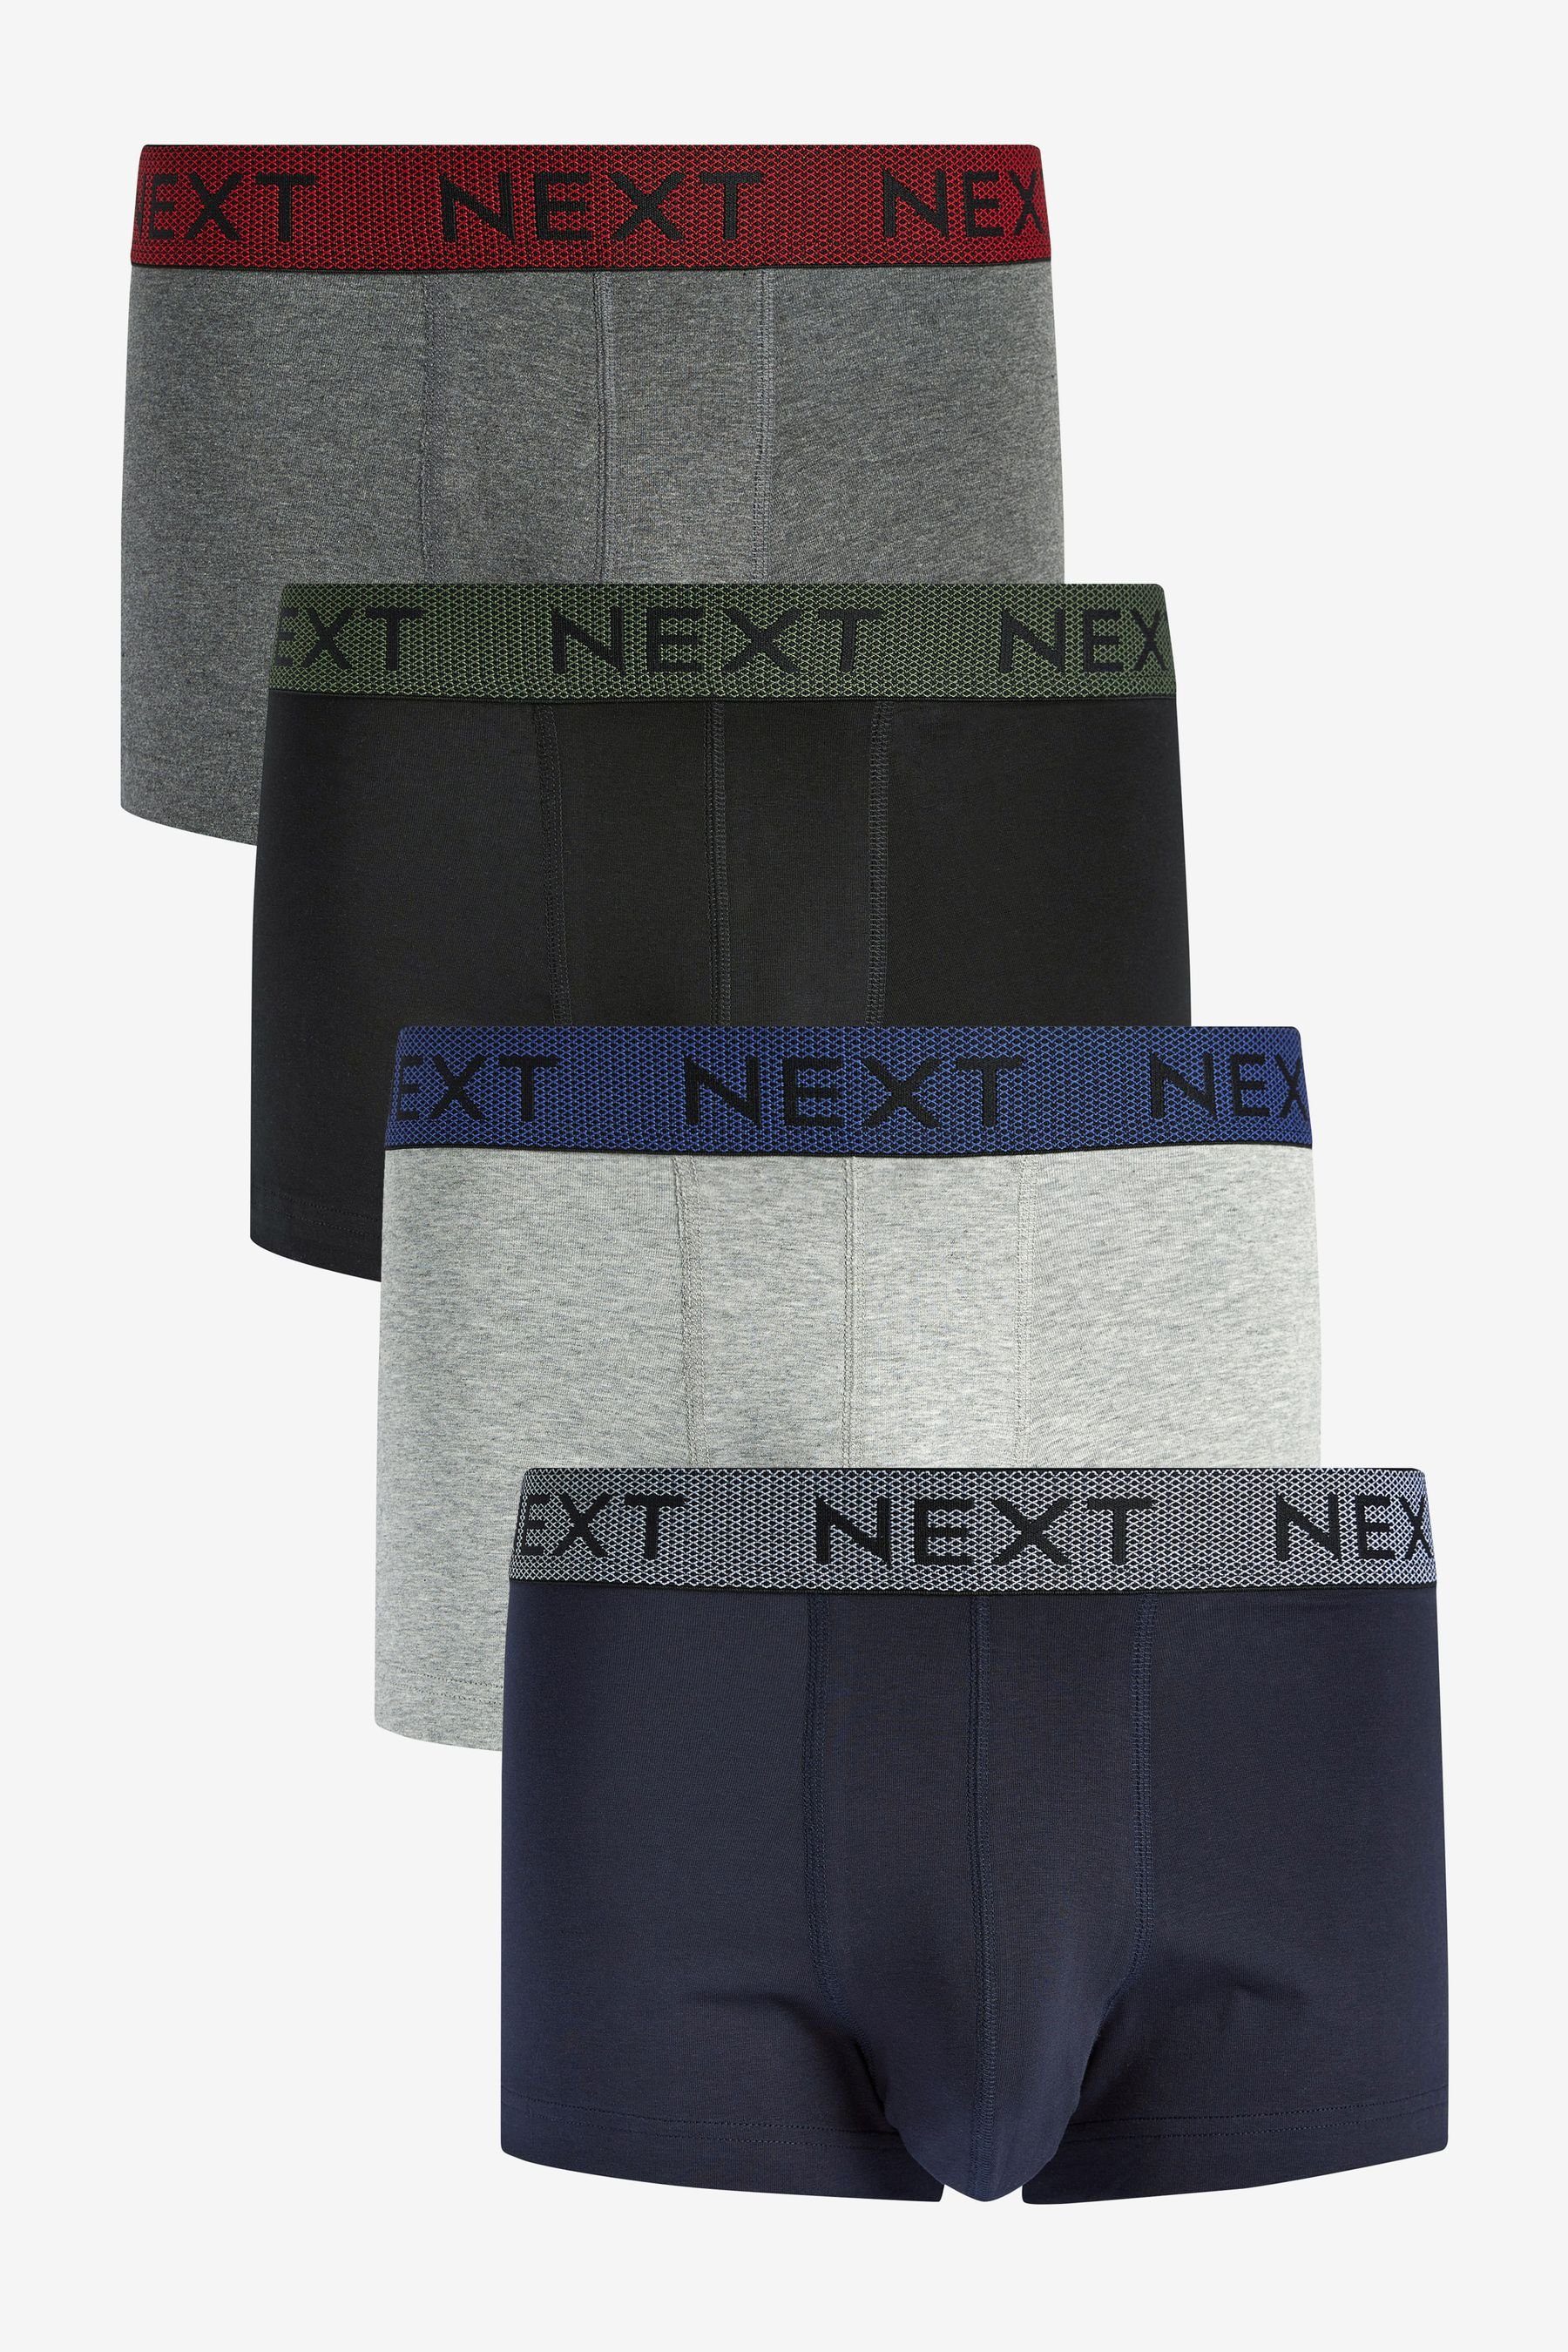 Next Hipster Boxershorts, 4er-Pack (4-St) Grey Blue Textured Waistband | Hipster-Panties